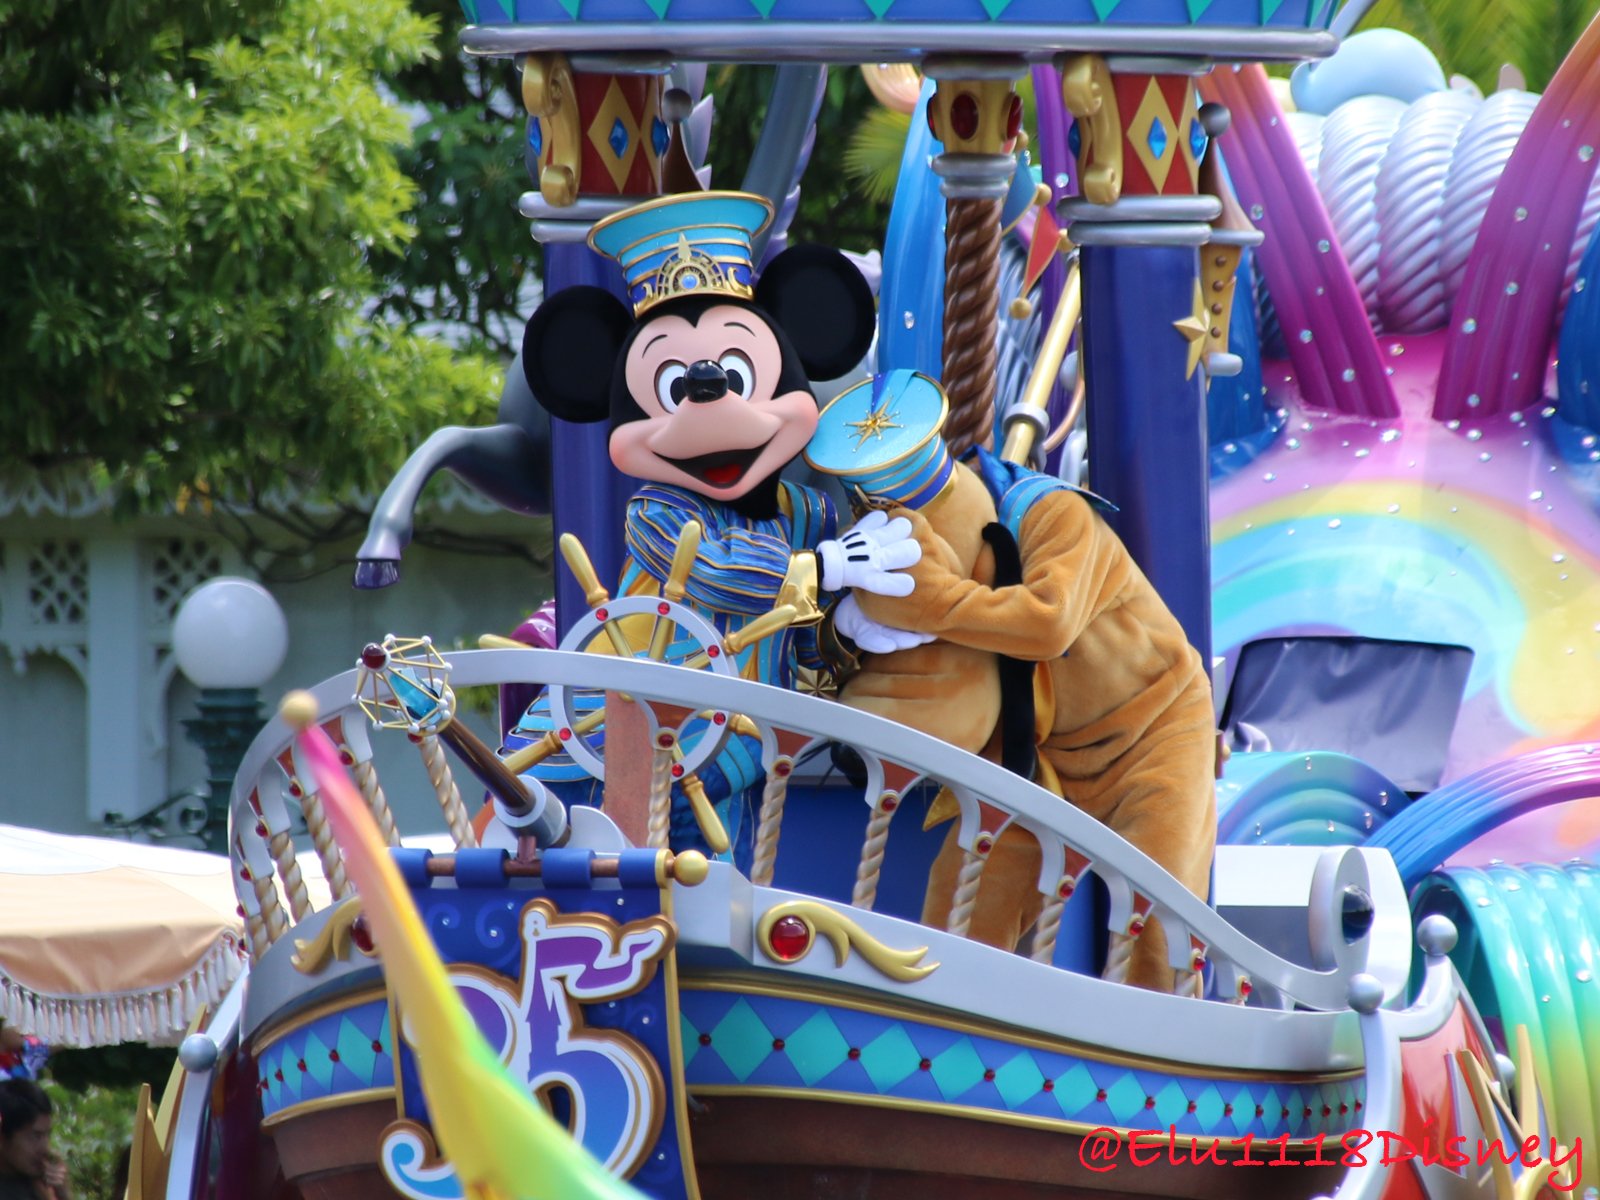 Elu 6 1 ドリーミング アップ その かっこいいミッキー Disney Tdl 東京ディズニーリゾート35周年 ドリーミングアップ ミッキーマウス ミッキー Mickey T Co Xadbvb0kq2 Twitter